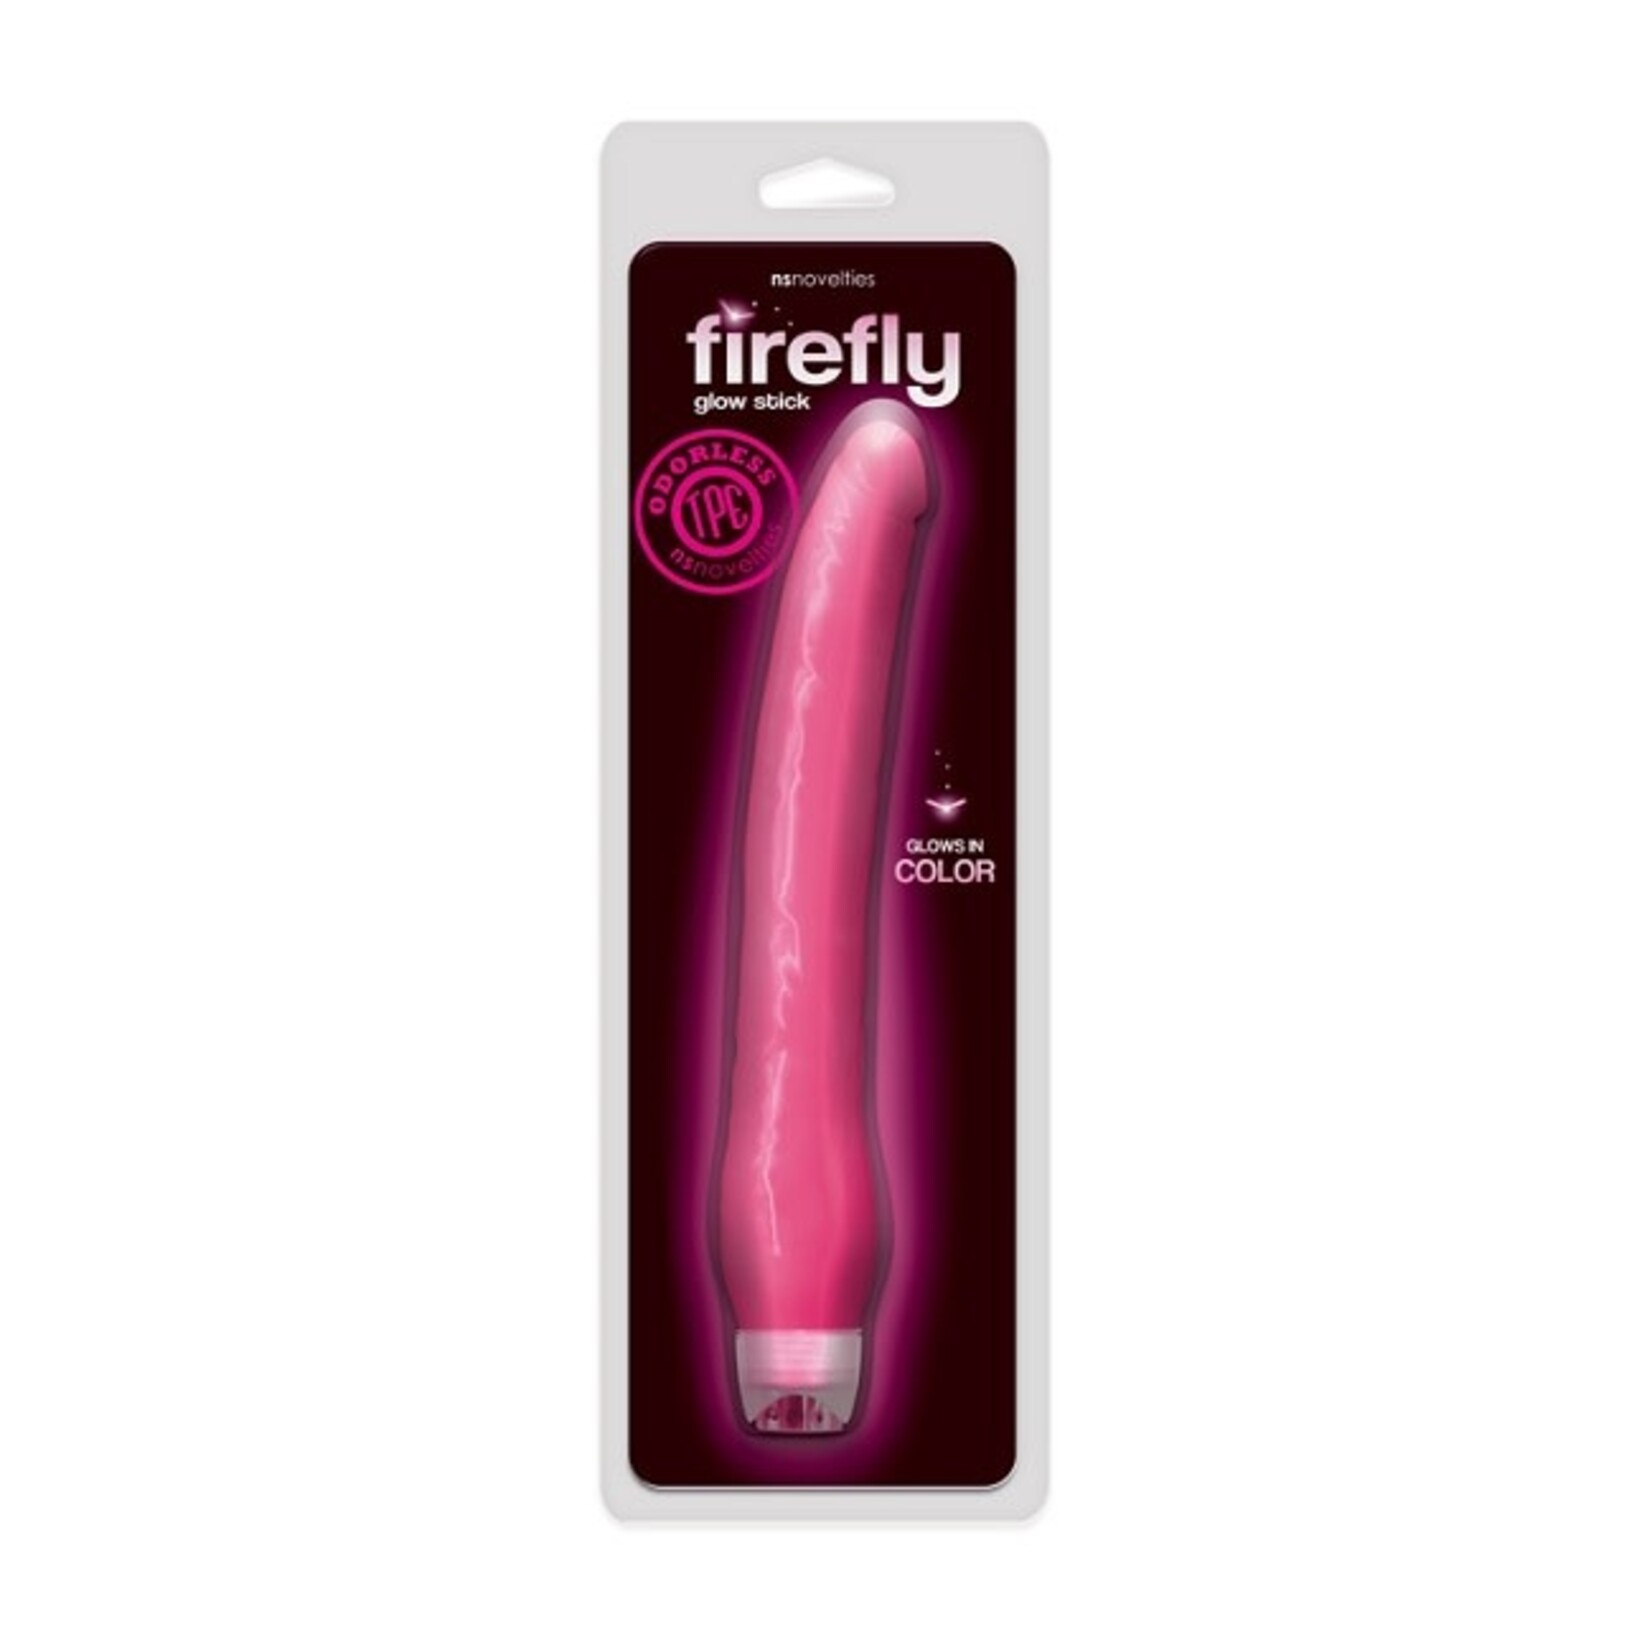 NS Novelties Firefly Glow Stick